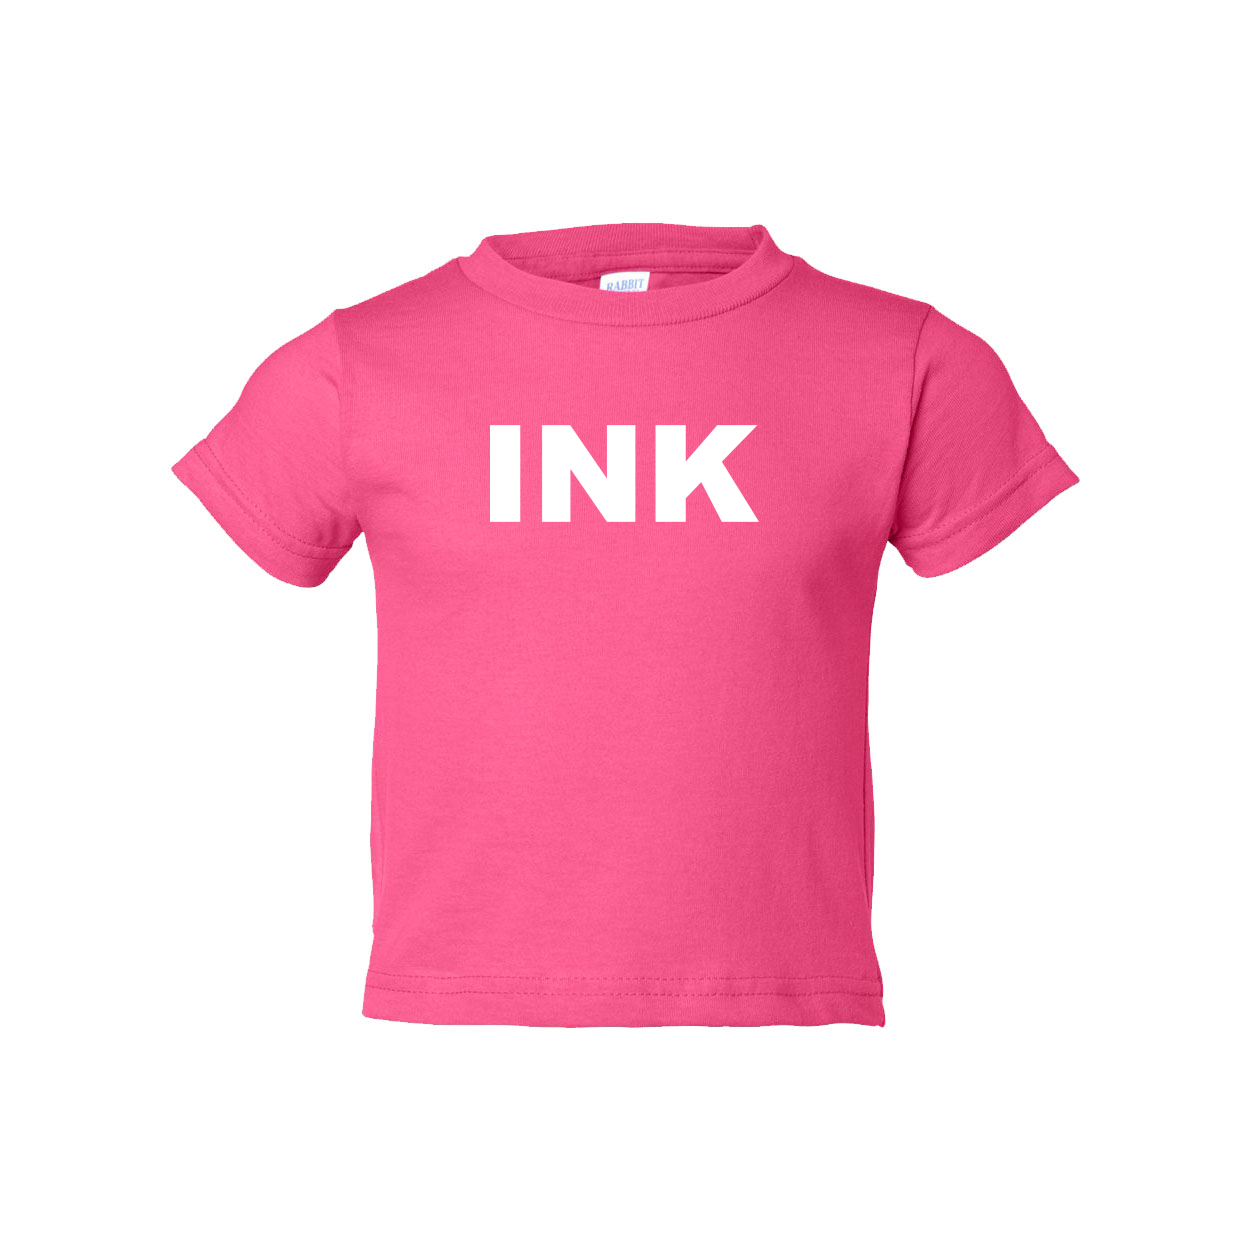 Ink Brand Logo Classic Toddler T-Shirt Pink